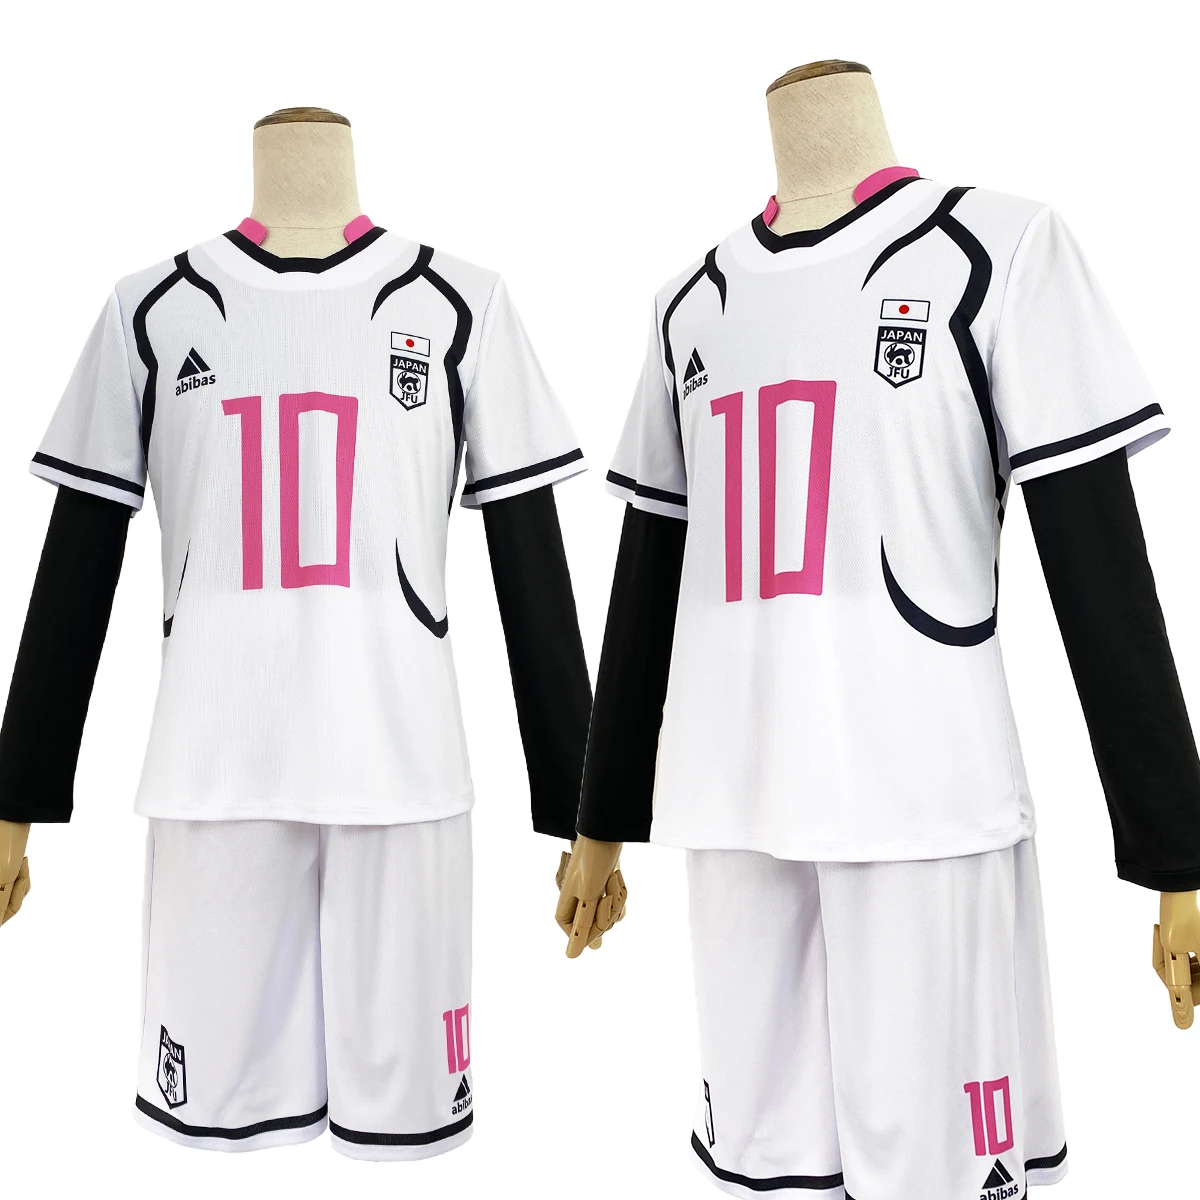 holoun-peluca-de-disfraz-de-anime-de-bloqueo-azul-sae-shidou-aiku-u20-uniforme-de-equipo-blanco-de-futbol-rosa-red-estetica-deporte-diario